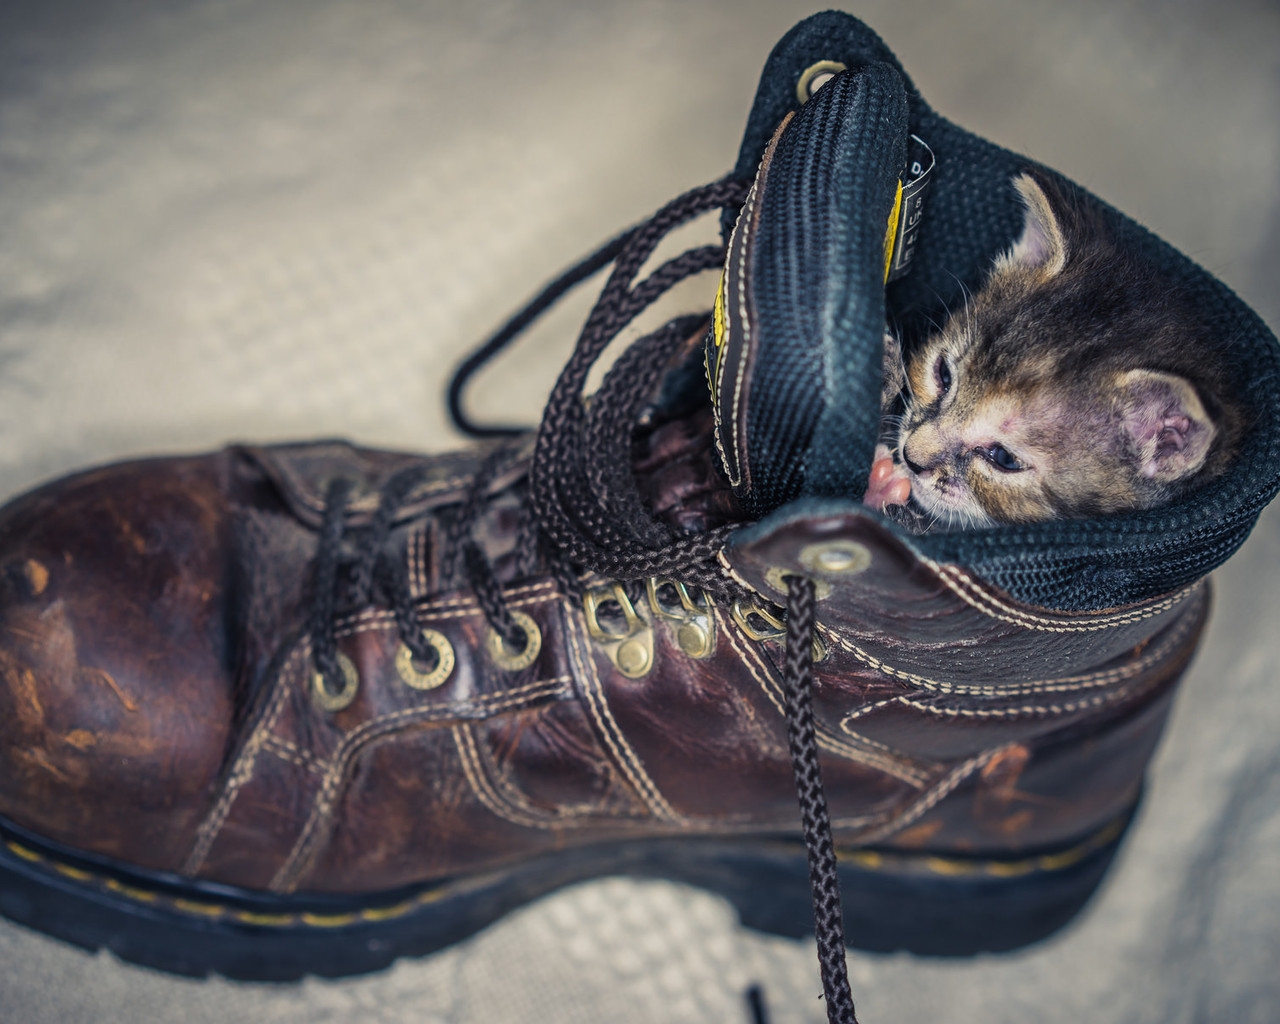 Kitten in Shoe for 1280 x 1024 resolution